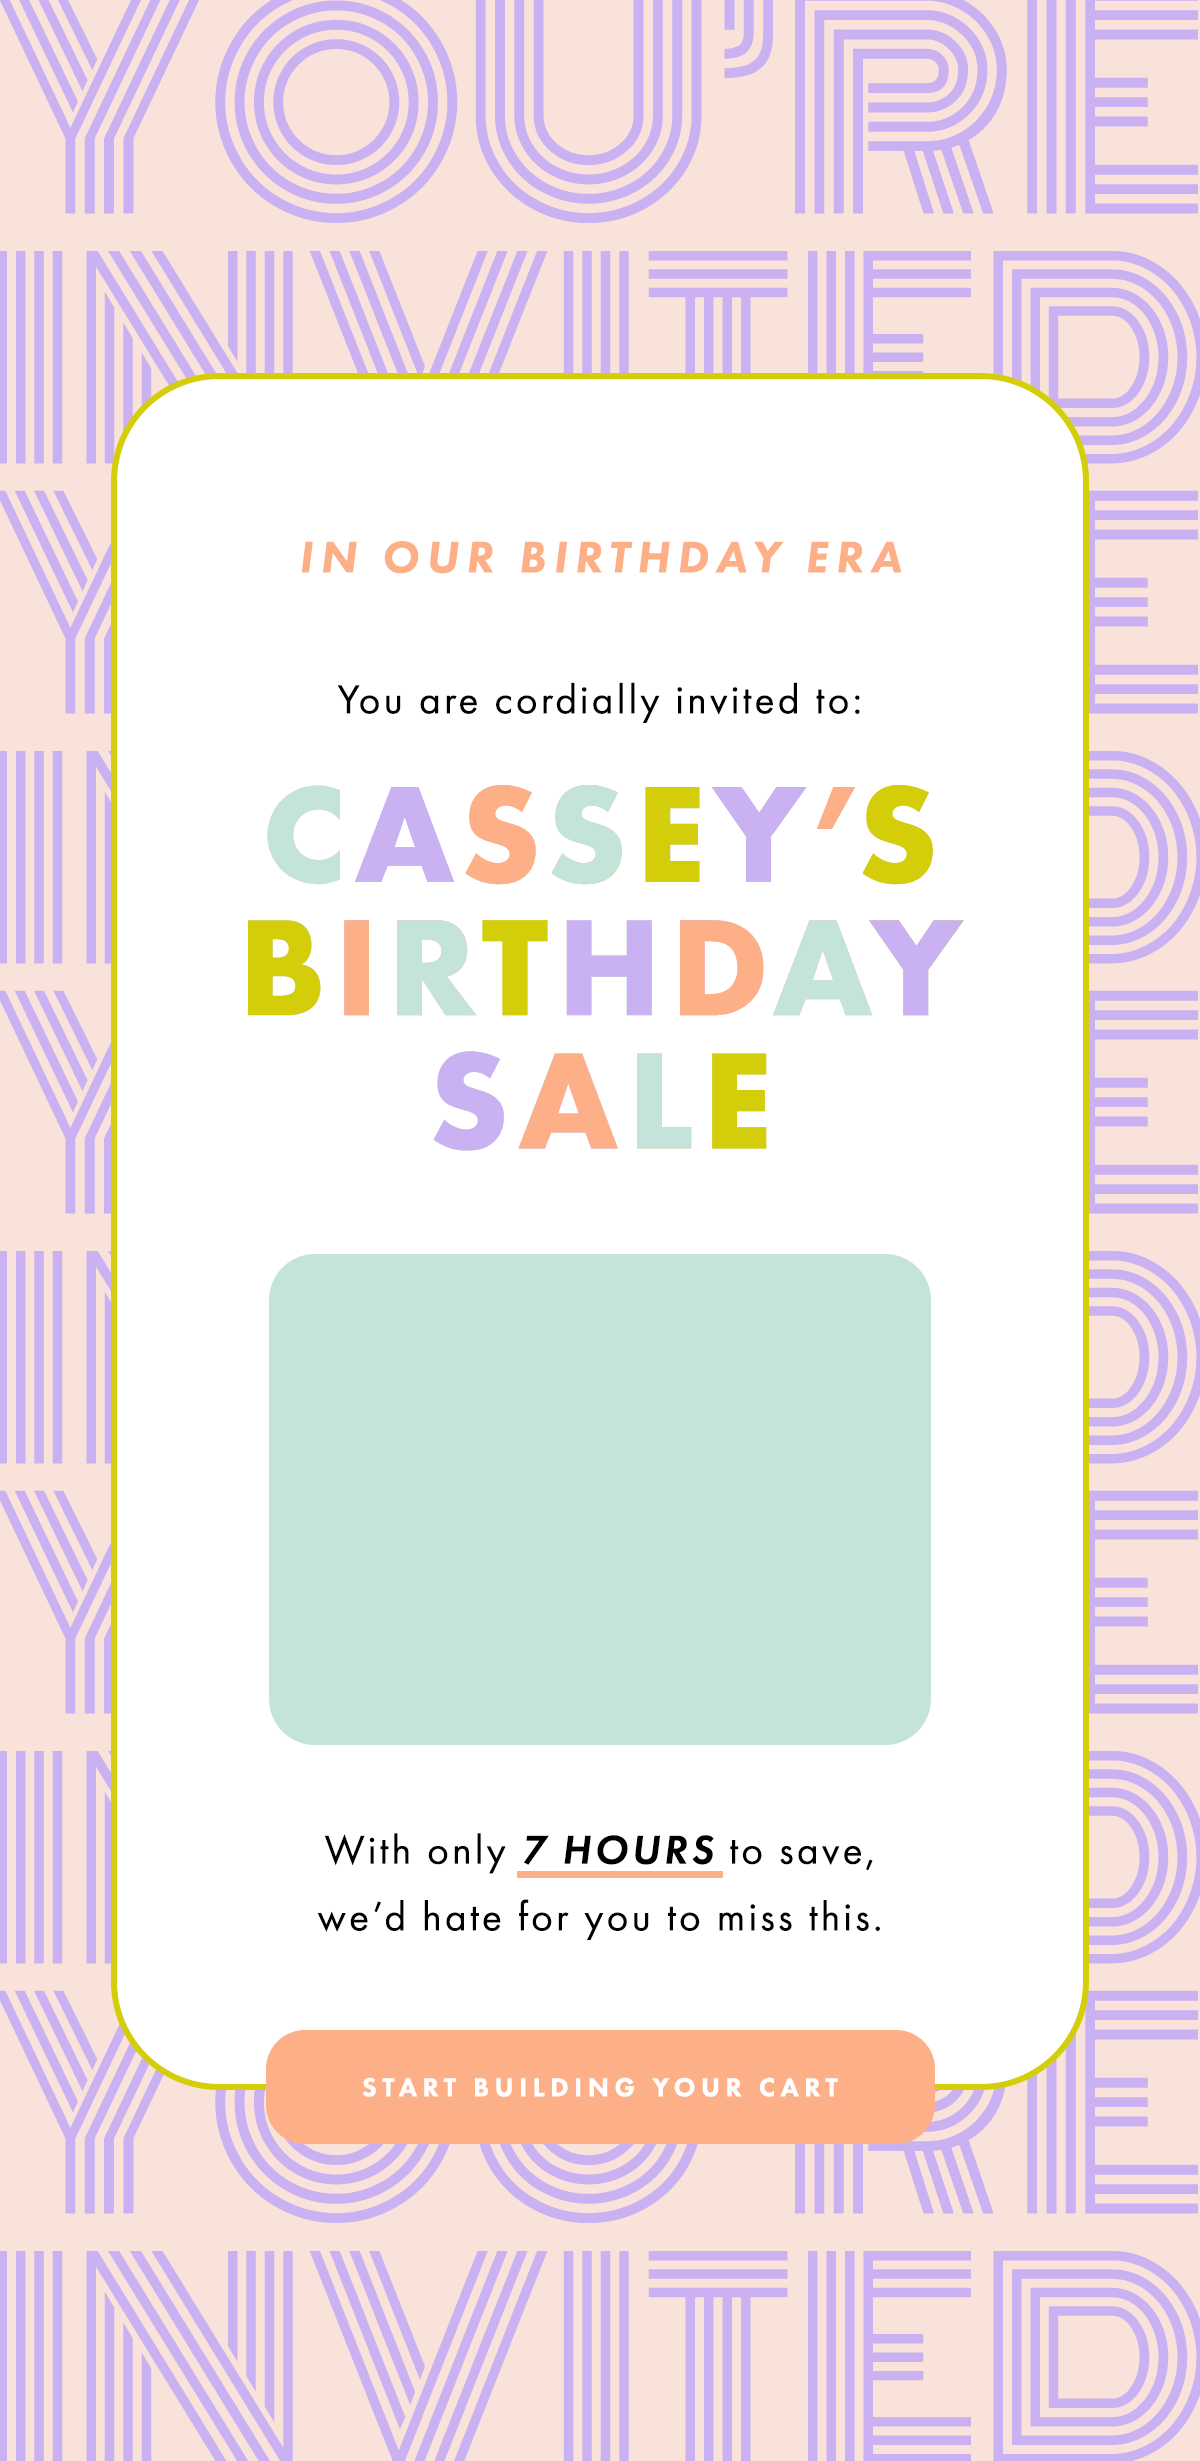 Cassey's Birthday Sale